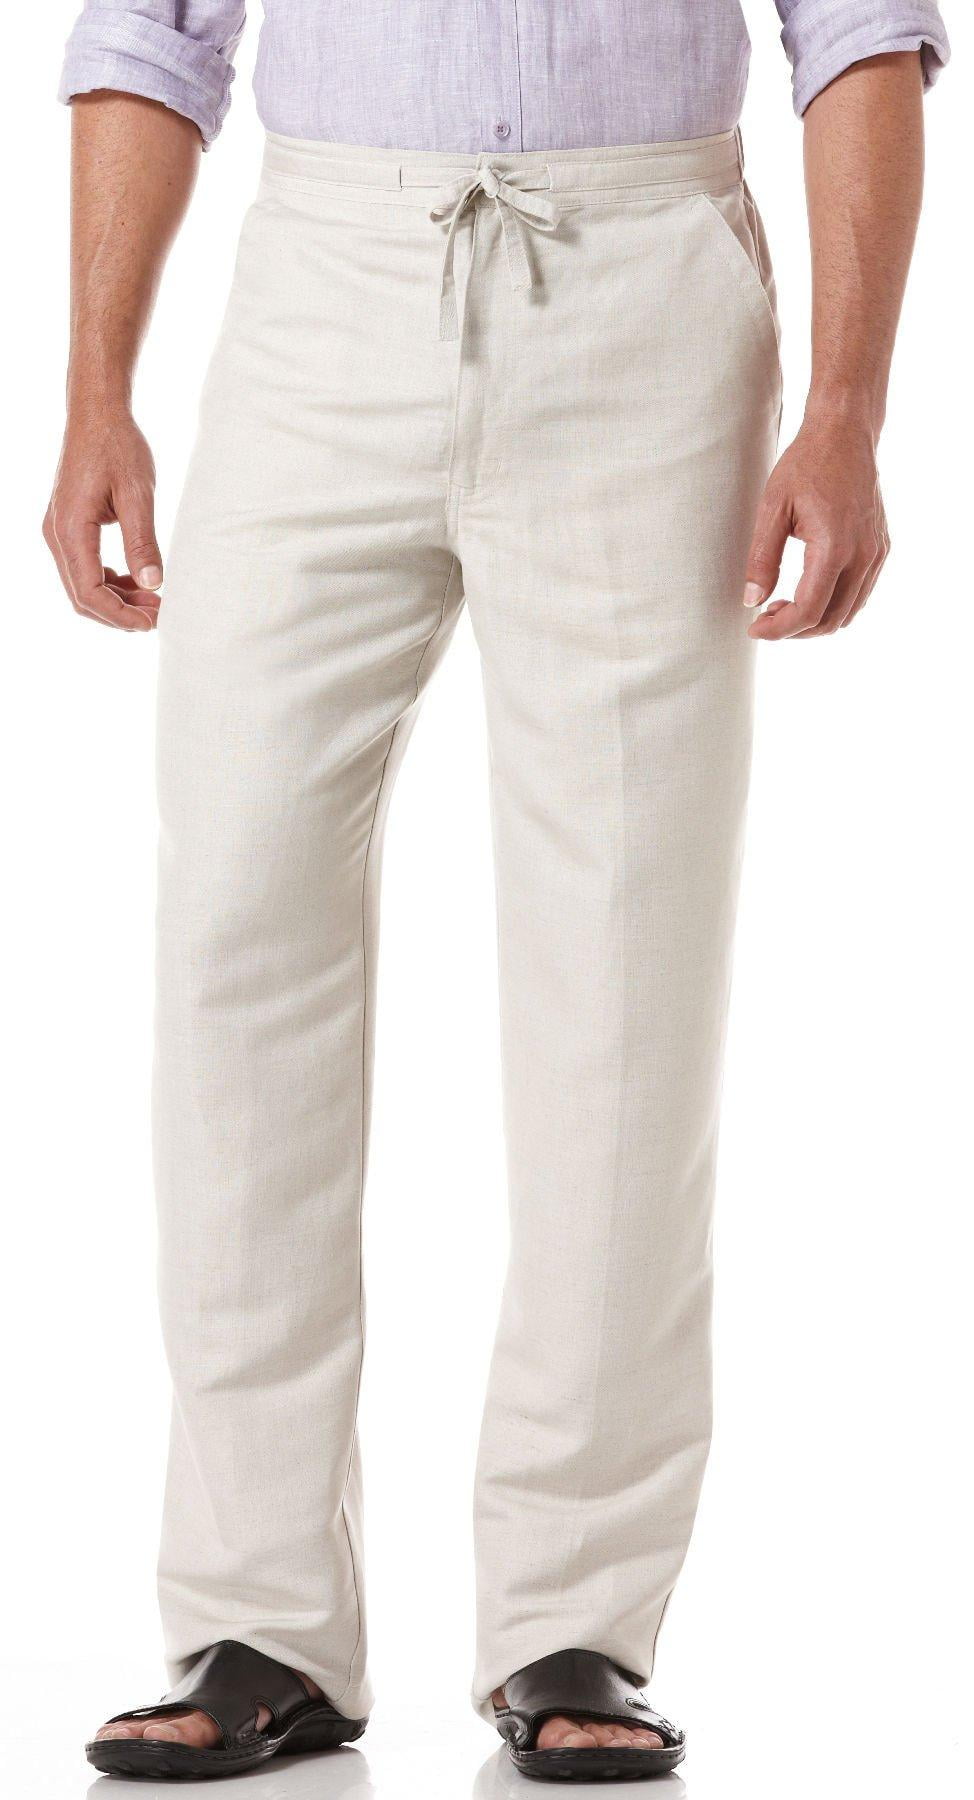 Men's Linen Pants Trousers Summer Pants Beach Pants Casual Pocket Elas